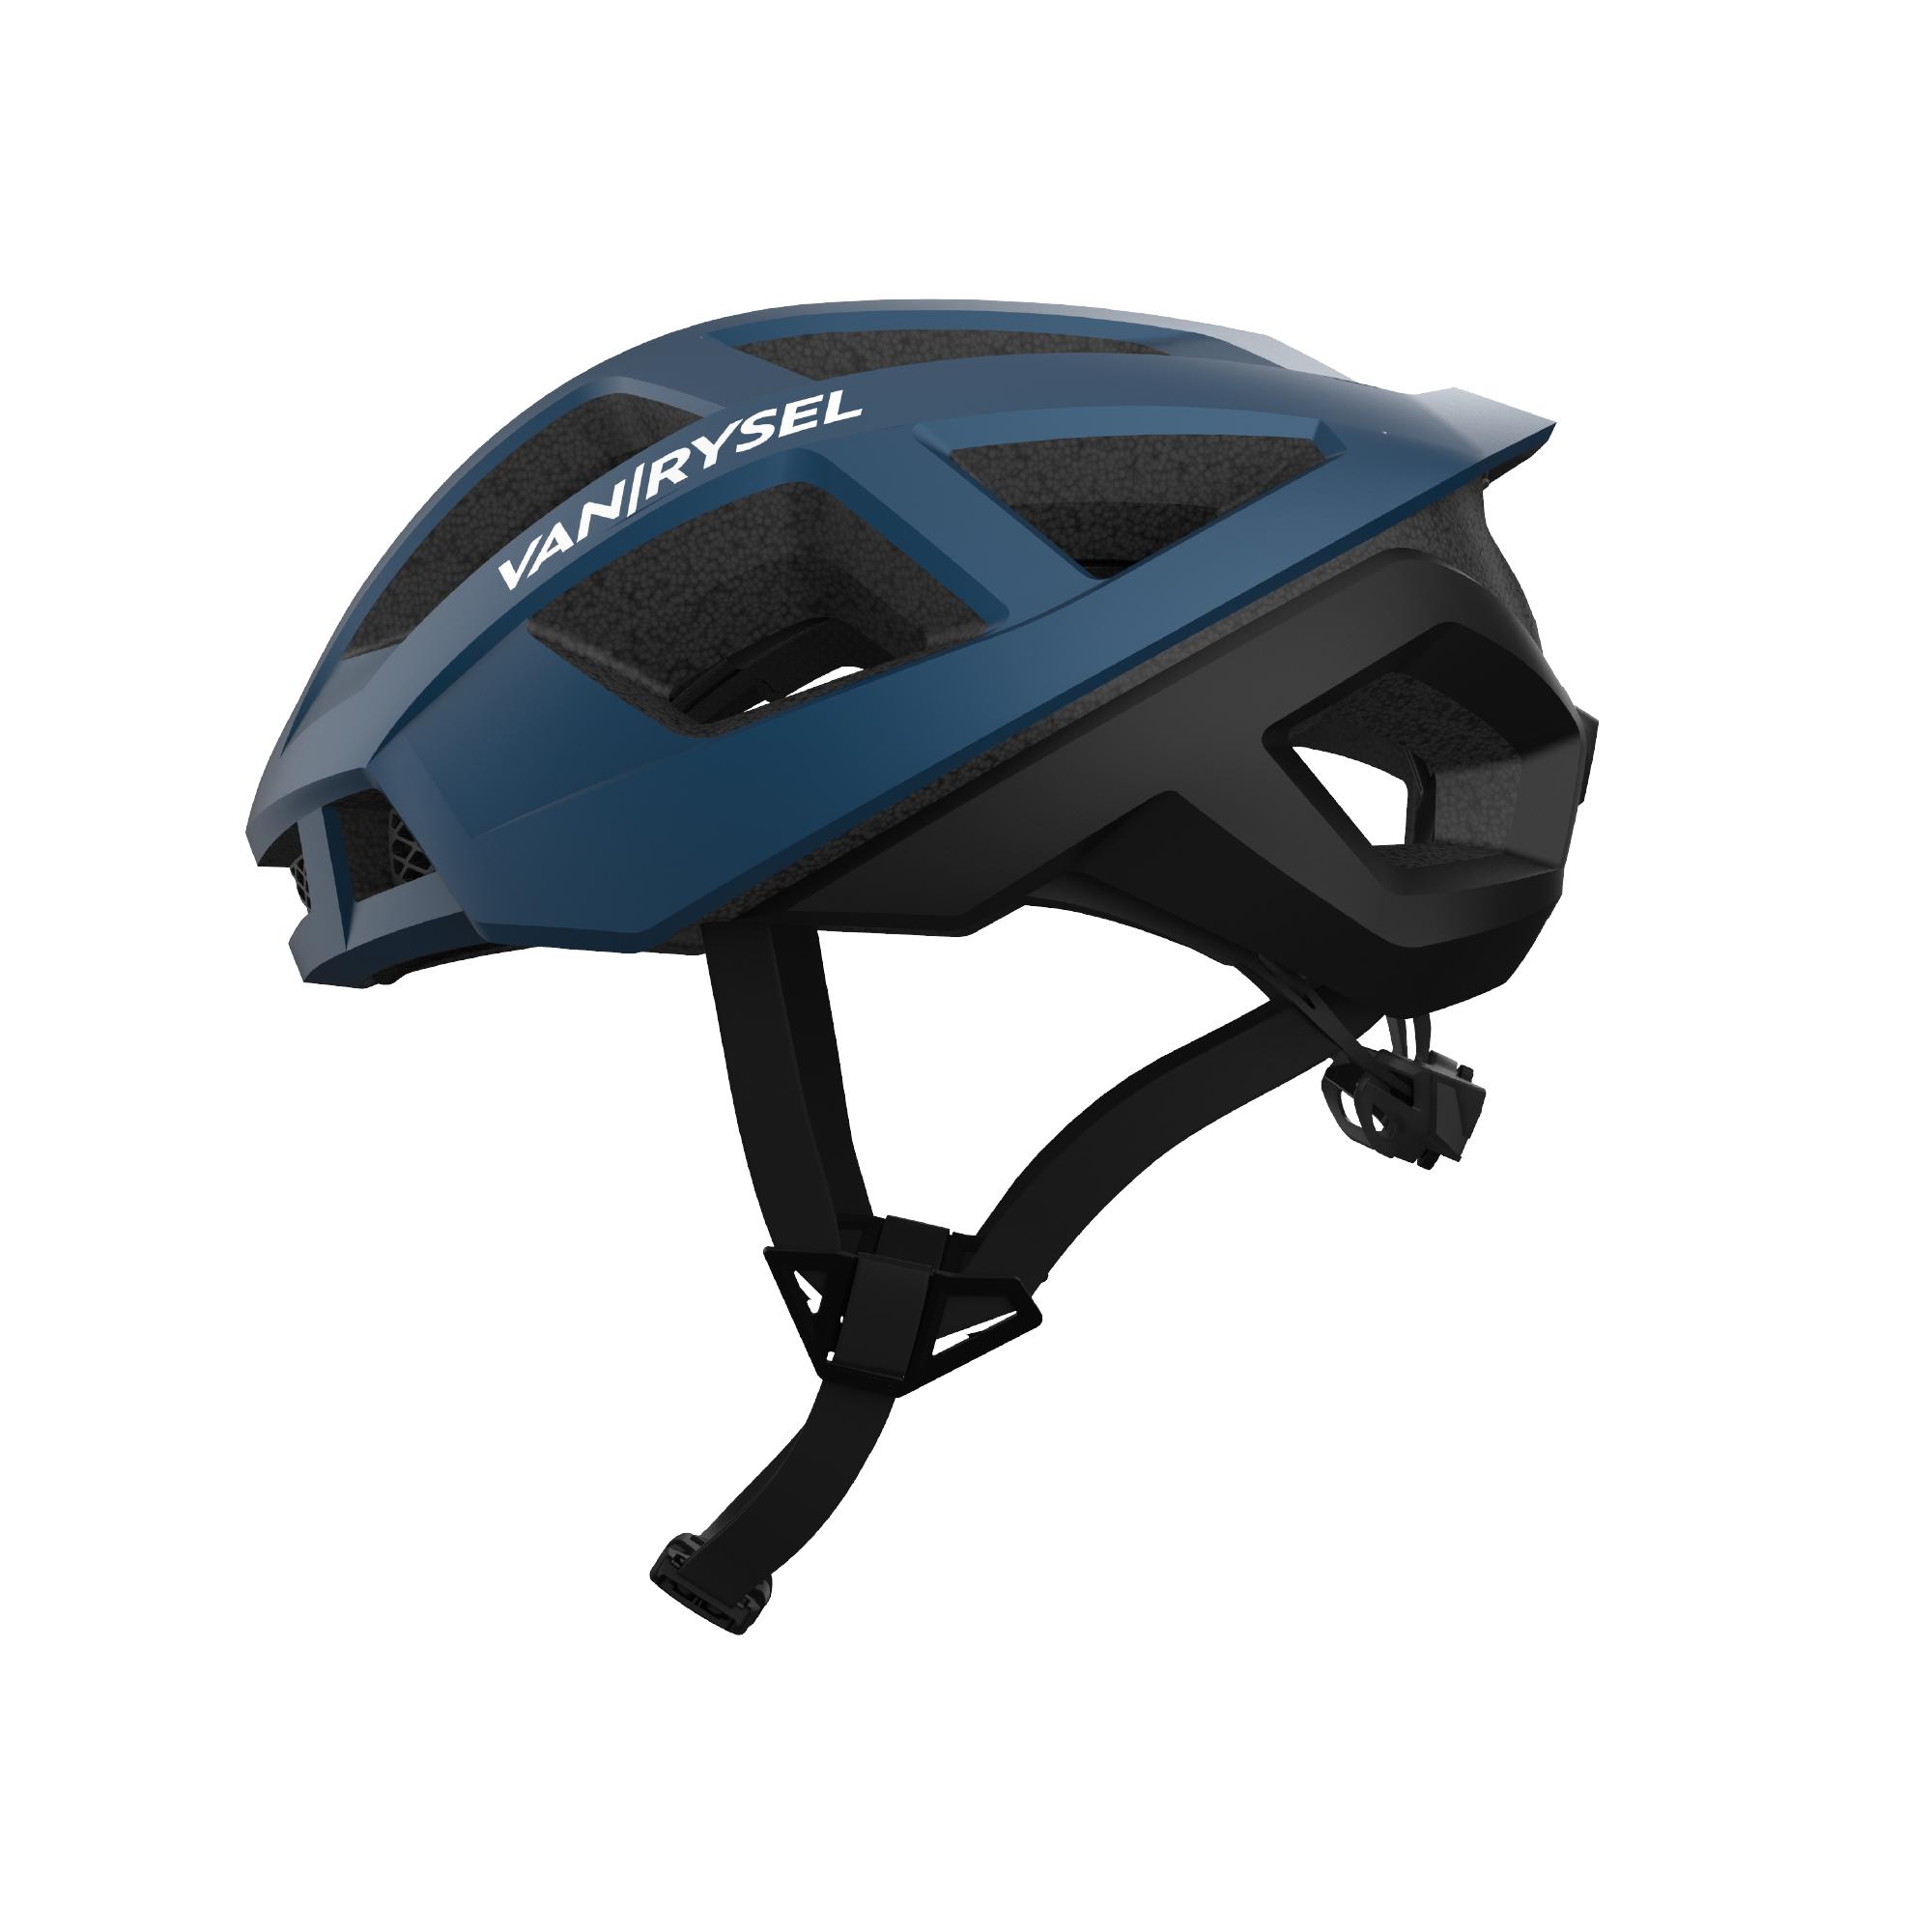 Racer Cycling Helmet VAN RYSEL - Decathlon